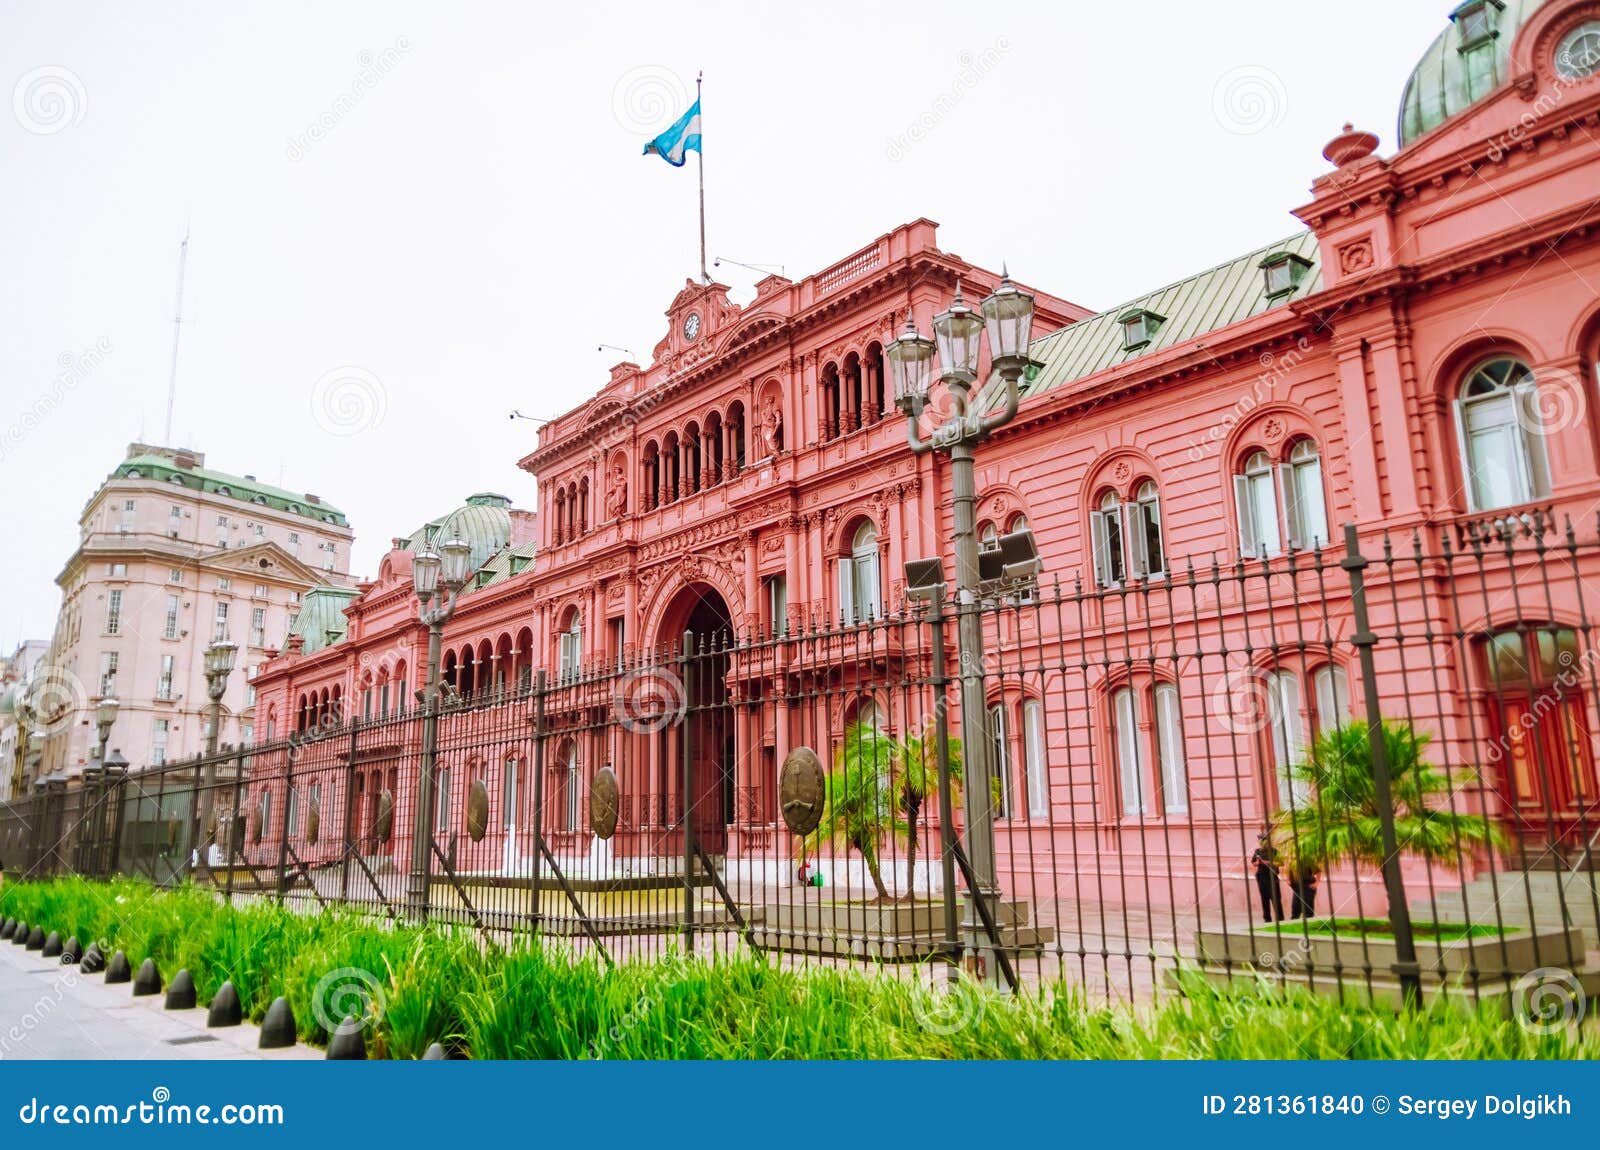 the pink house casa rosada also known as government house casa de gobierno